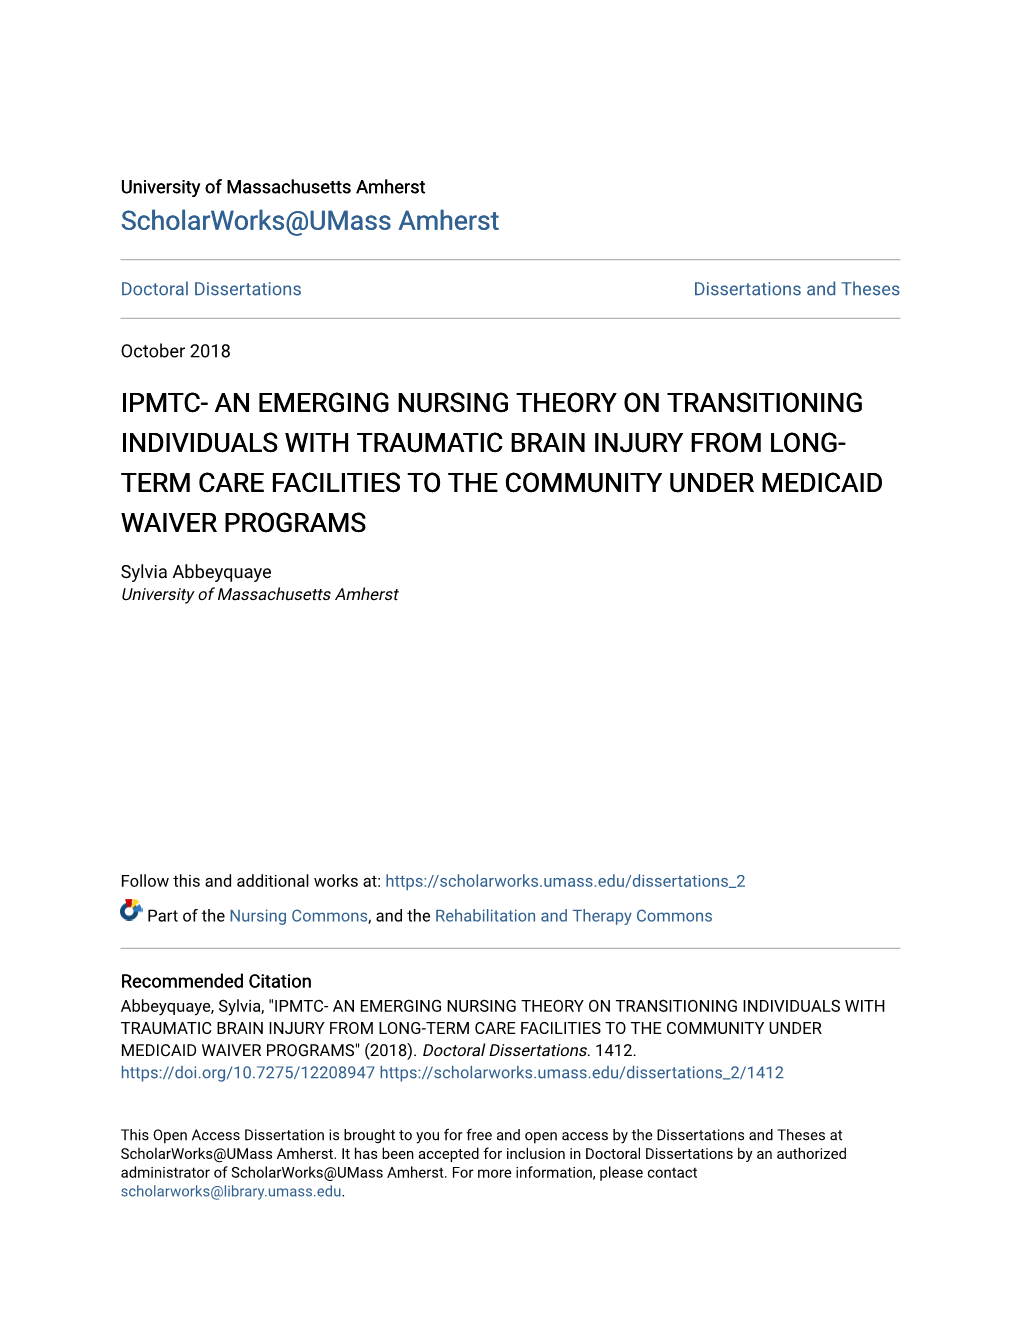 Ipmtc- an Emerging Nursing Theory on Transitioning